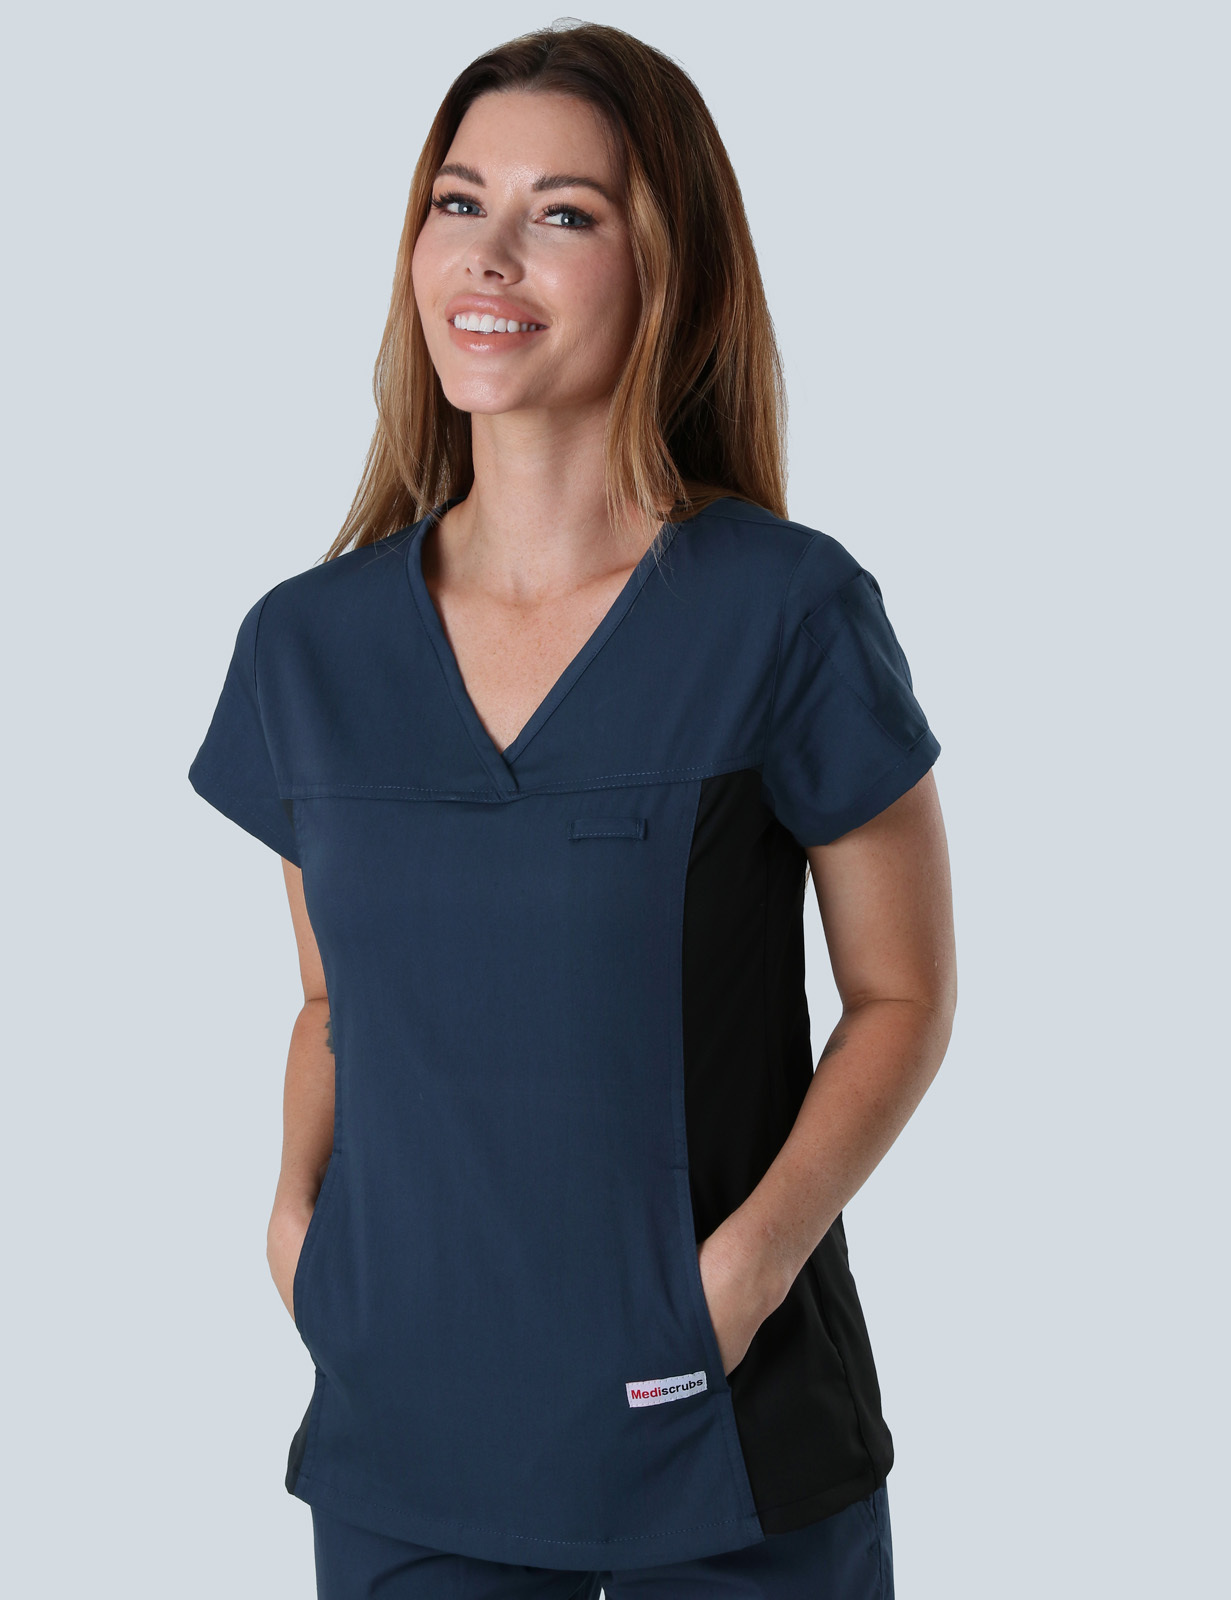 Dandenong Monash Health - ICU (Women's Fit Spandex Scrub Top and Cargo Pants in Navy incl Logos)